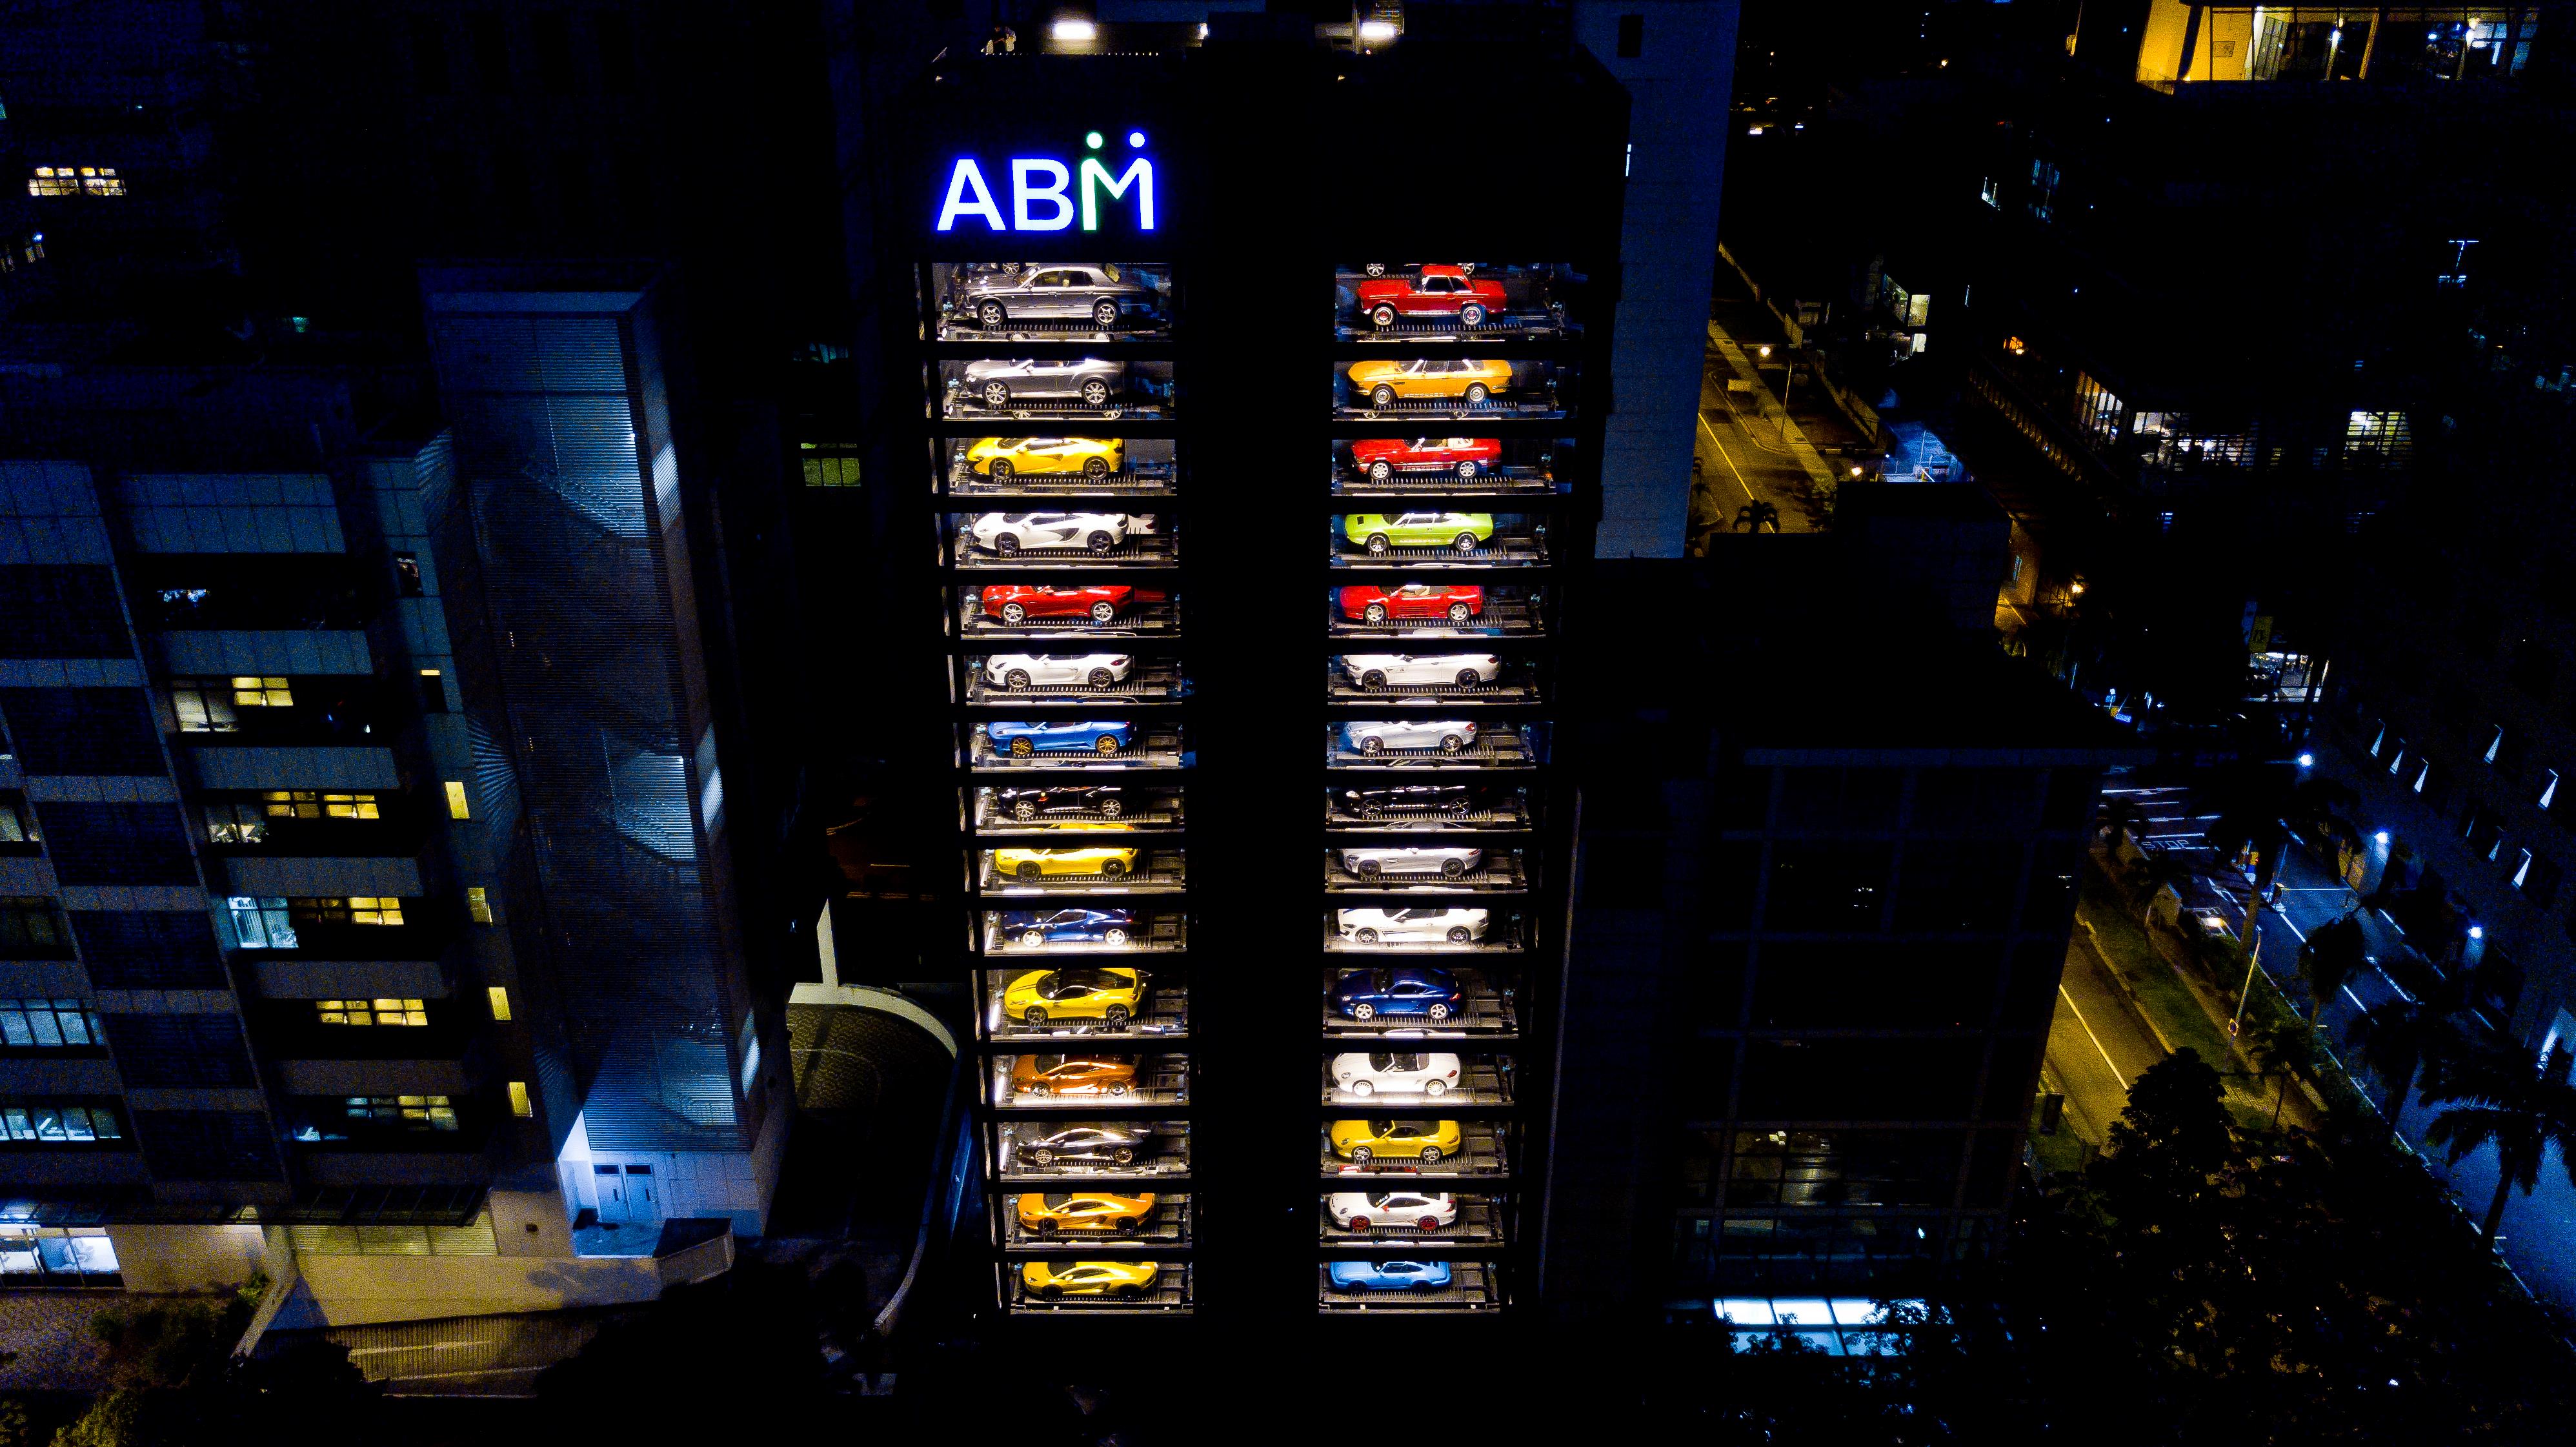 Autobahn Motors in Singapore opens the world’s largest car vending machine